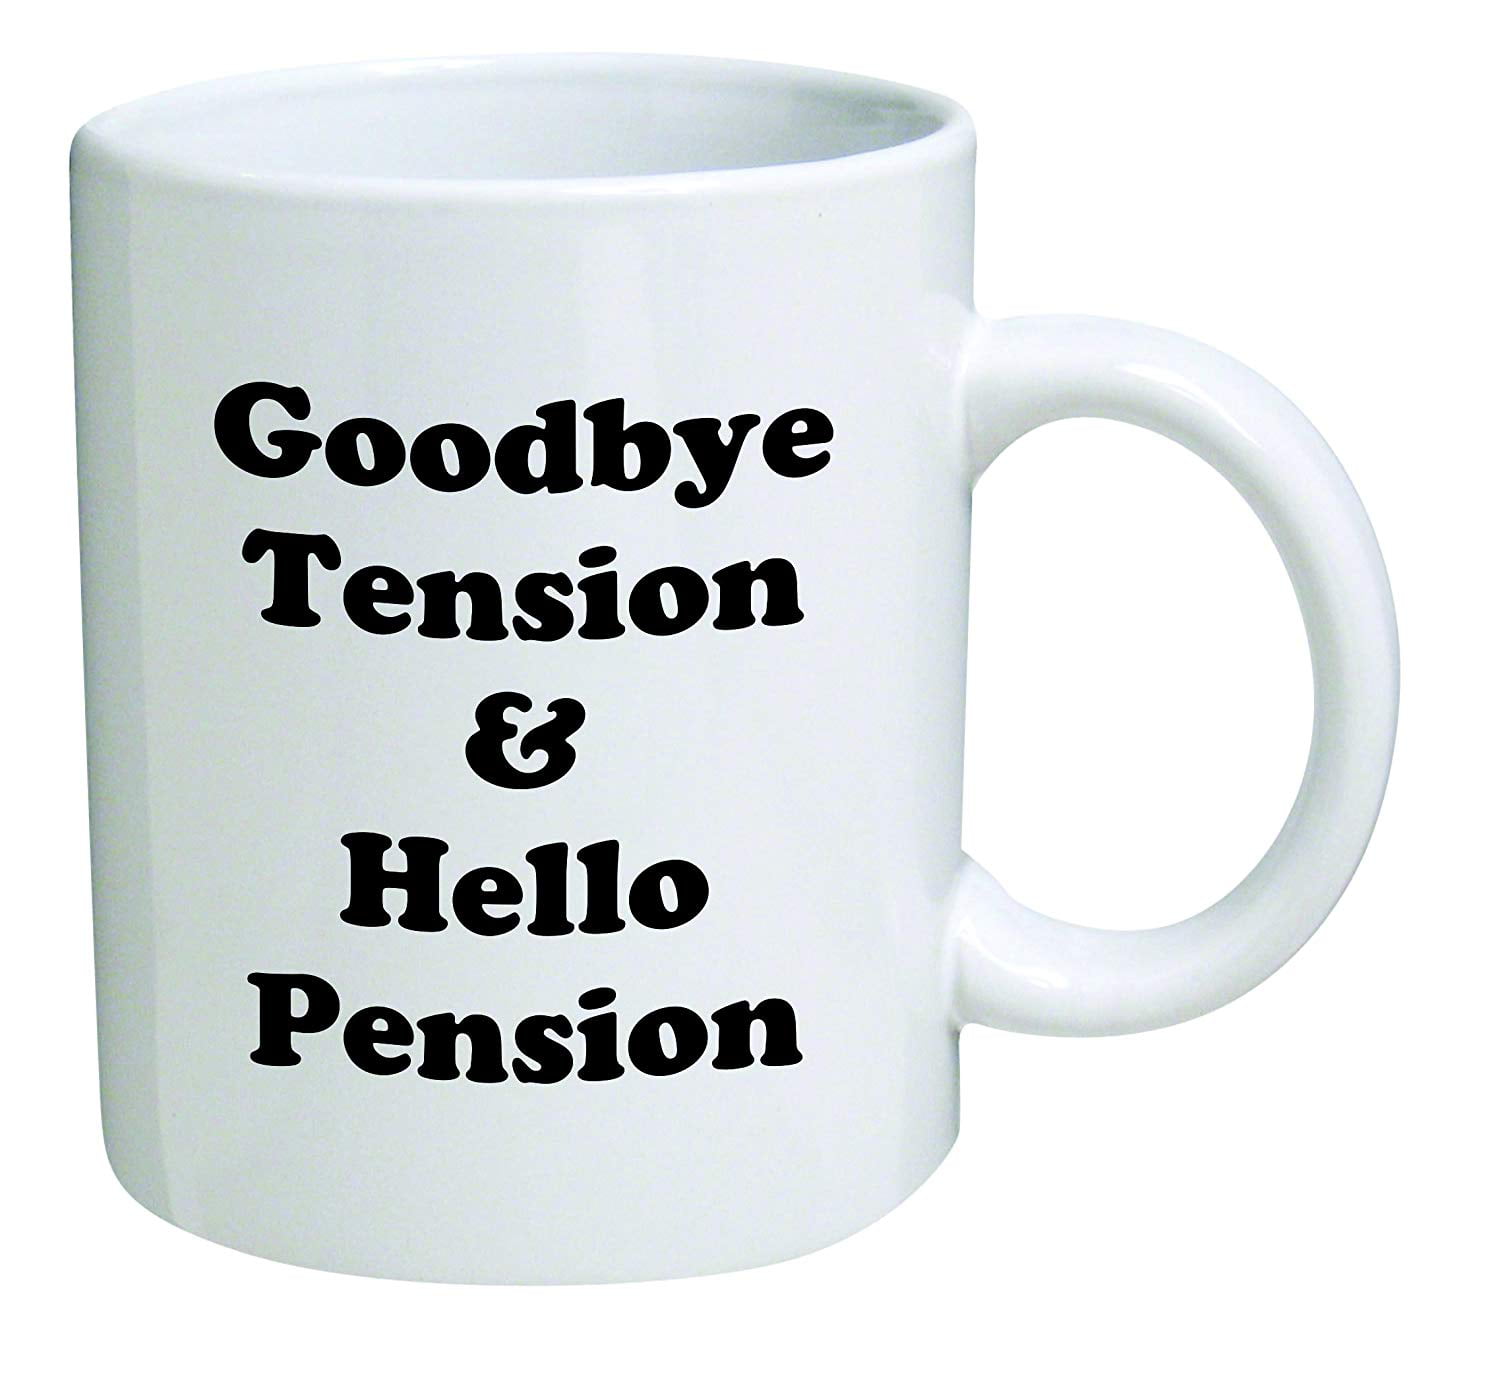 Retirement mug 